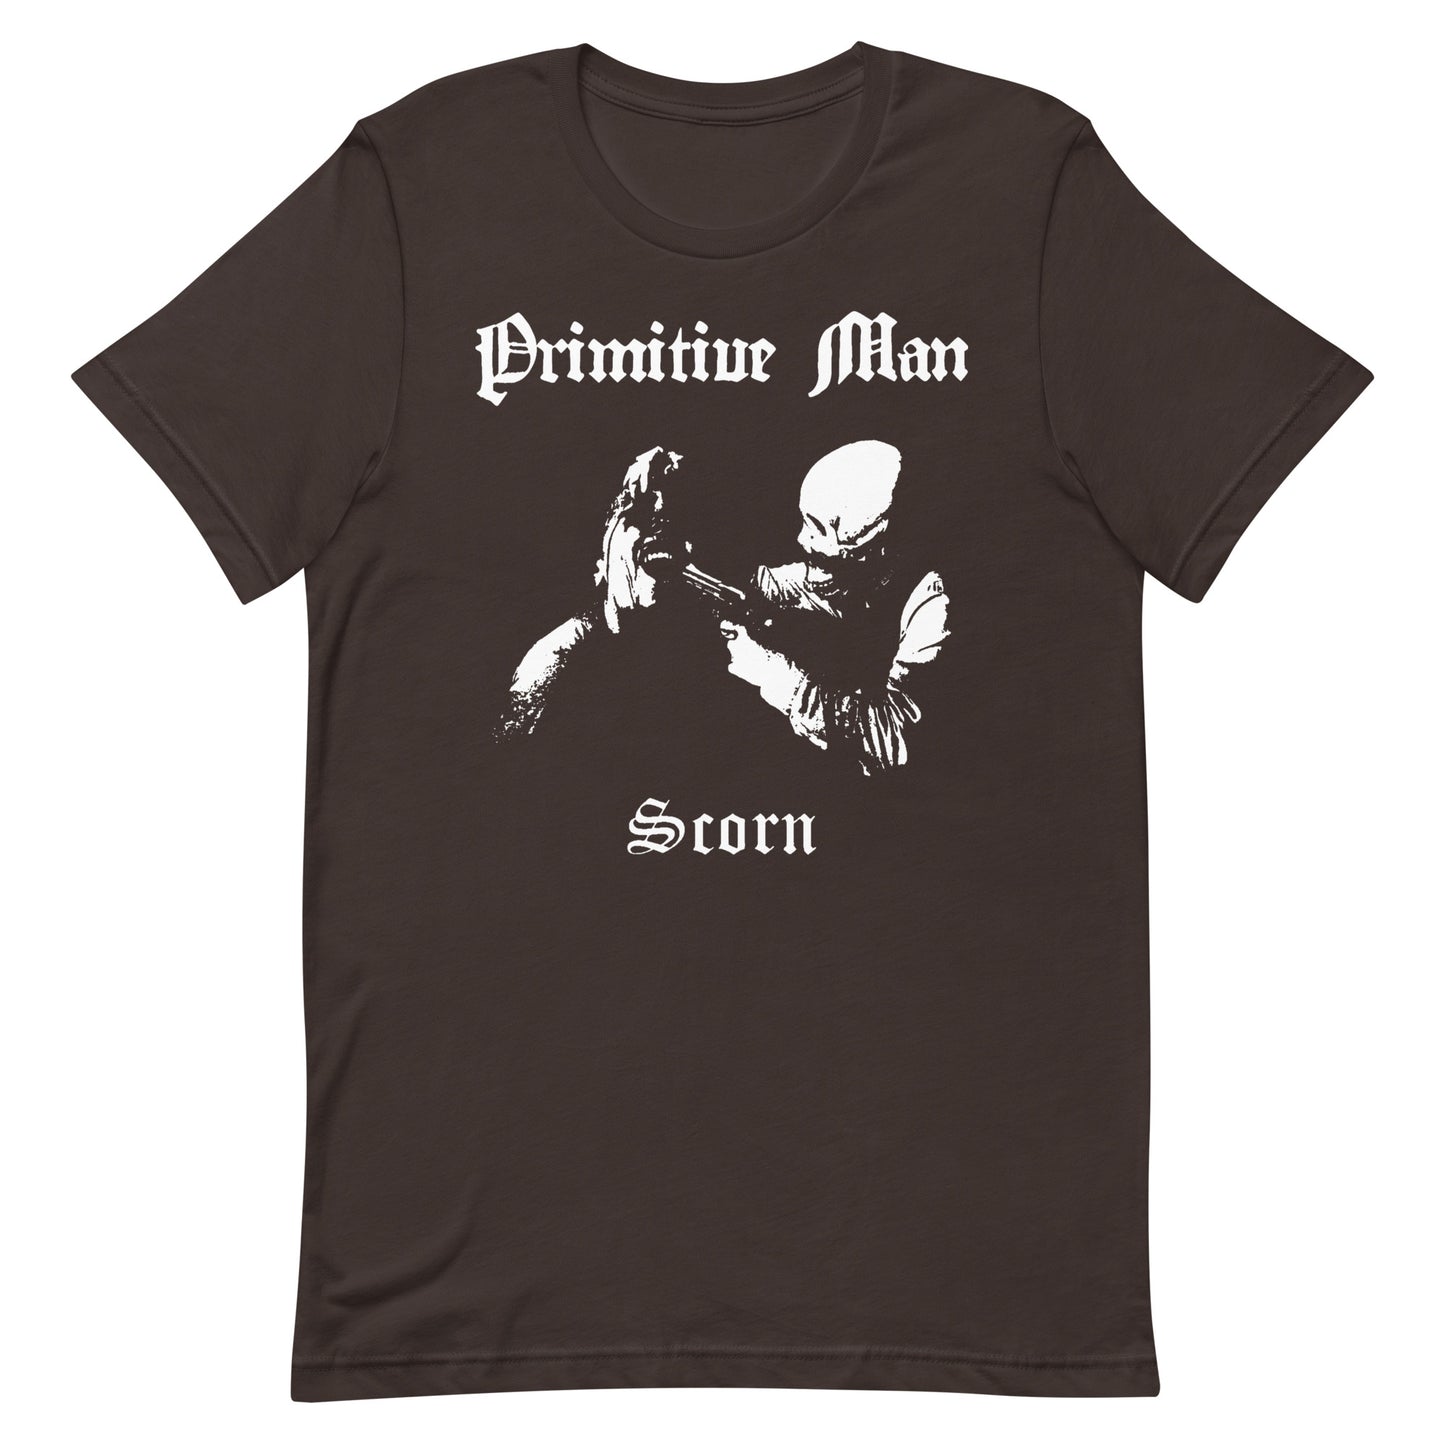 Primitive Man - Scorn T-Shirt